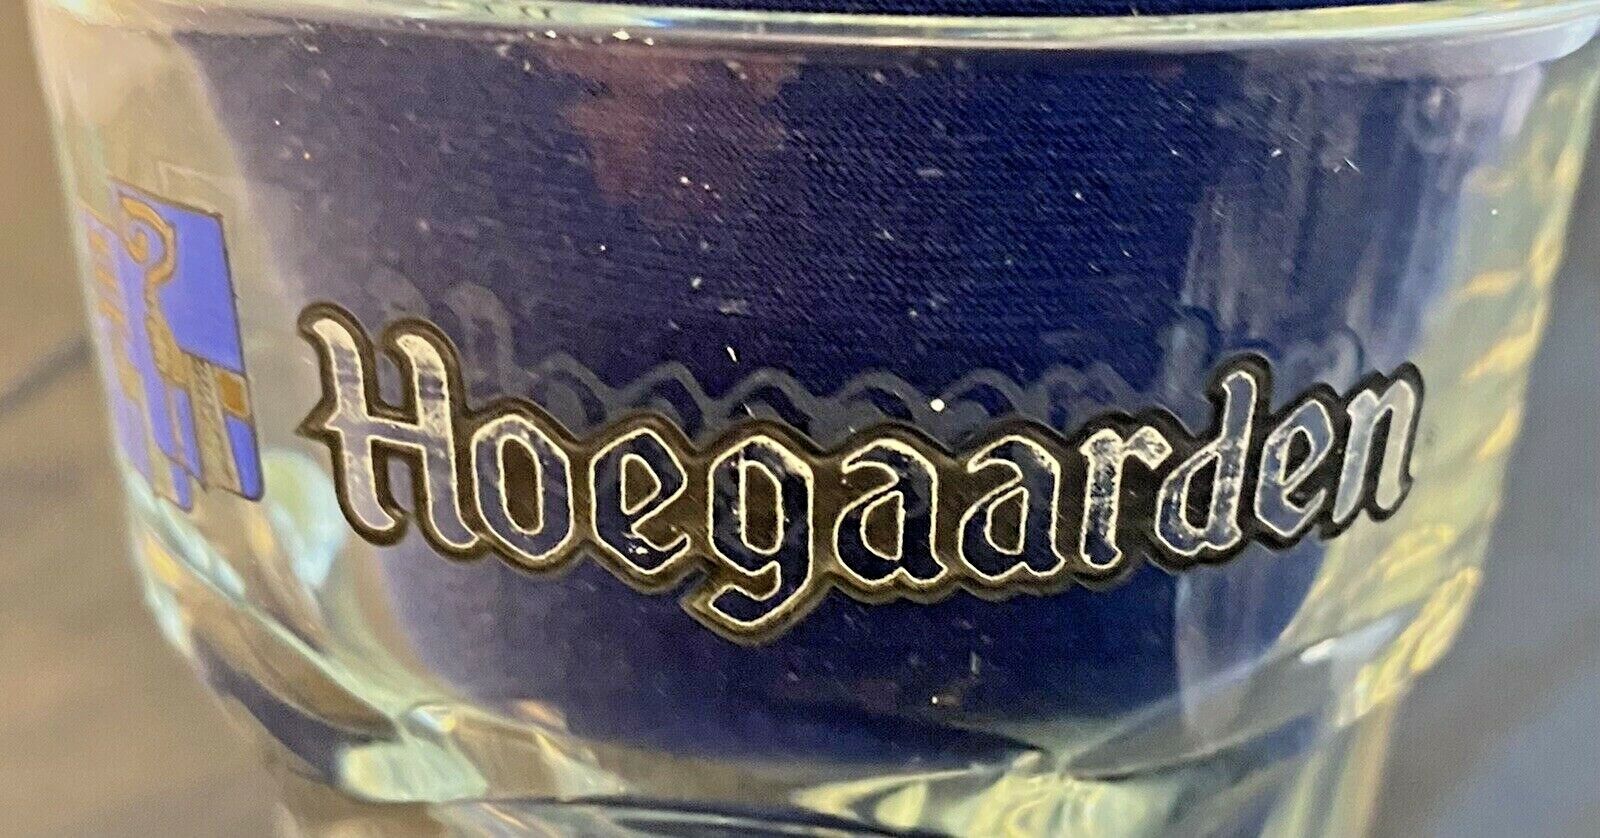 VINTAGE Beer Glasses 1- 16 oz. & 4- 5 oz. HOEGAARDEN 6-Sided Clear 5-Piece Set hoegaarden - фотография #8